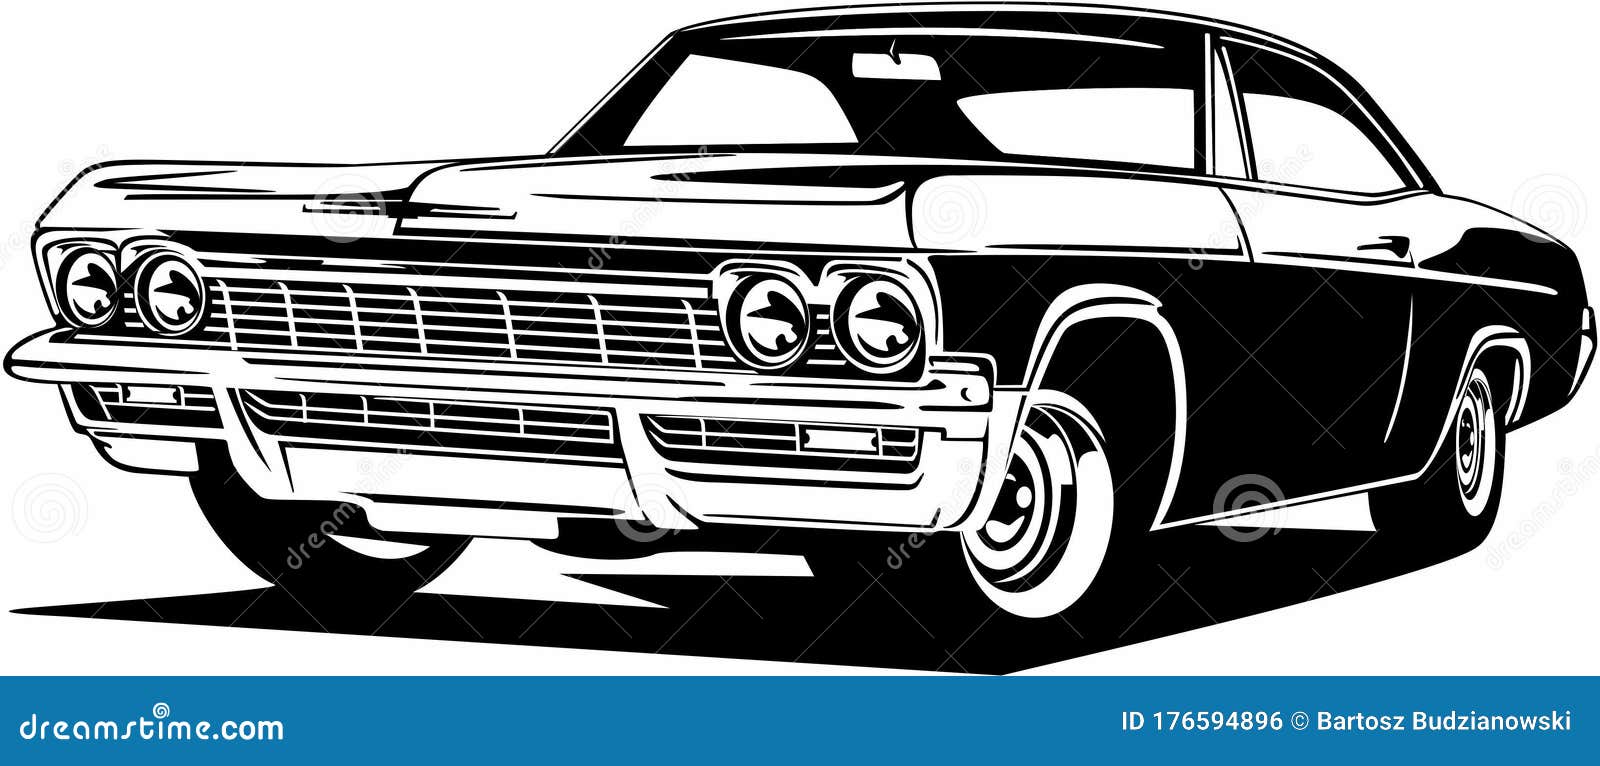 classic vintage retro american legendary car chevrolet impala